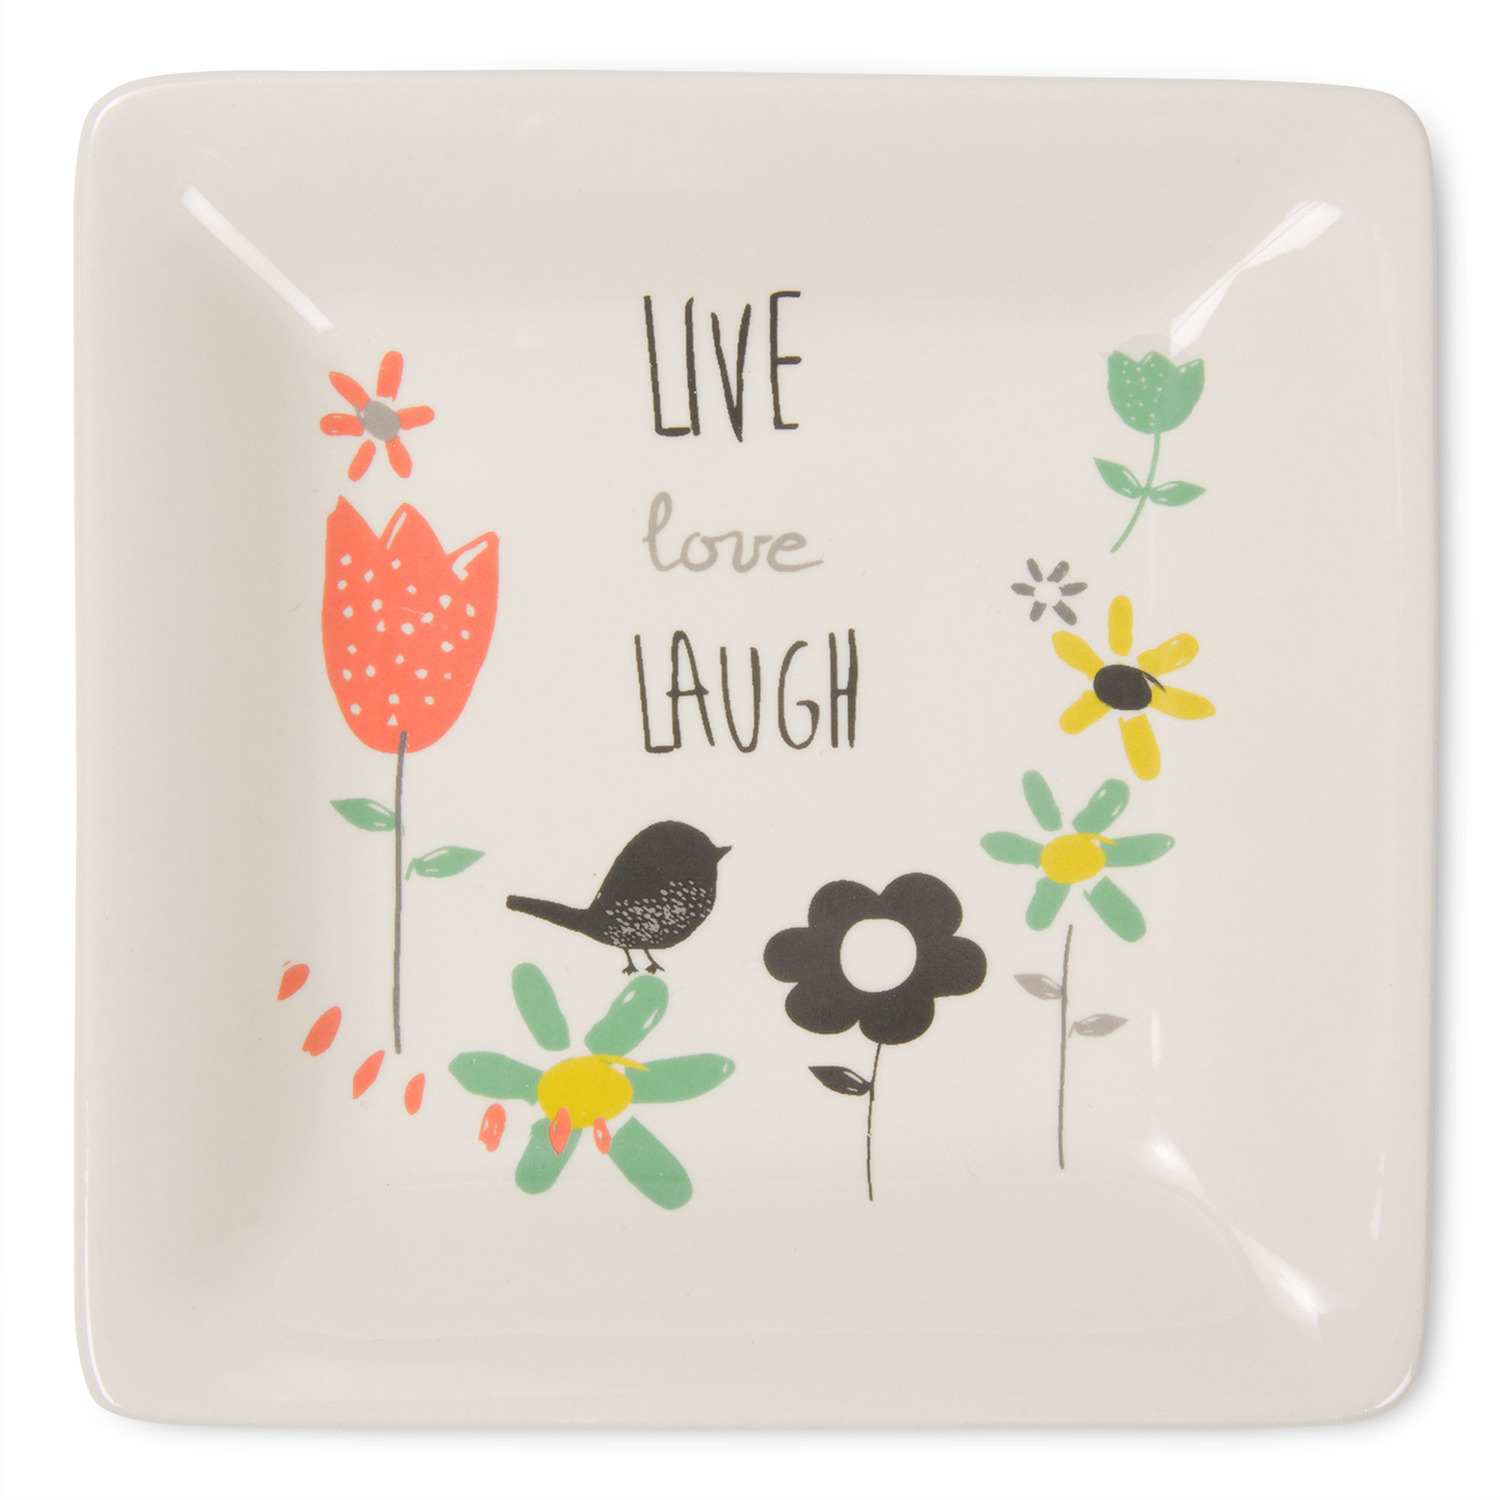 Live Love Laugh by Bloom by Amylee Weeks - Live Love Laugh - 4.5" Ceramic Keepsake Dish